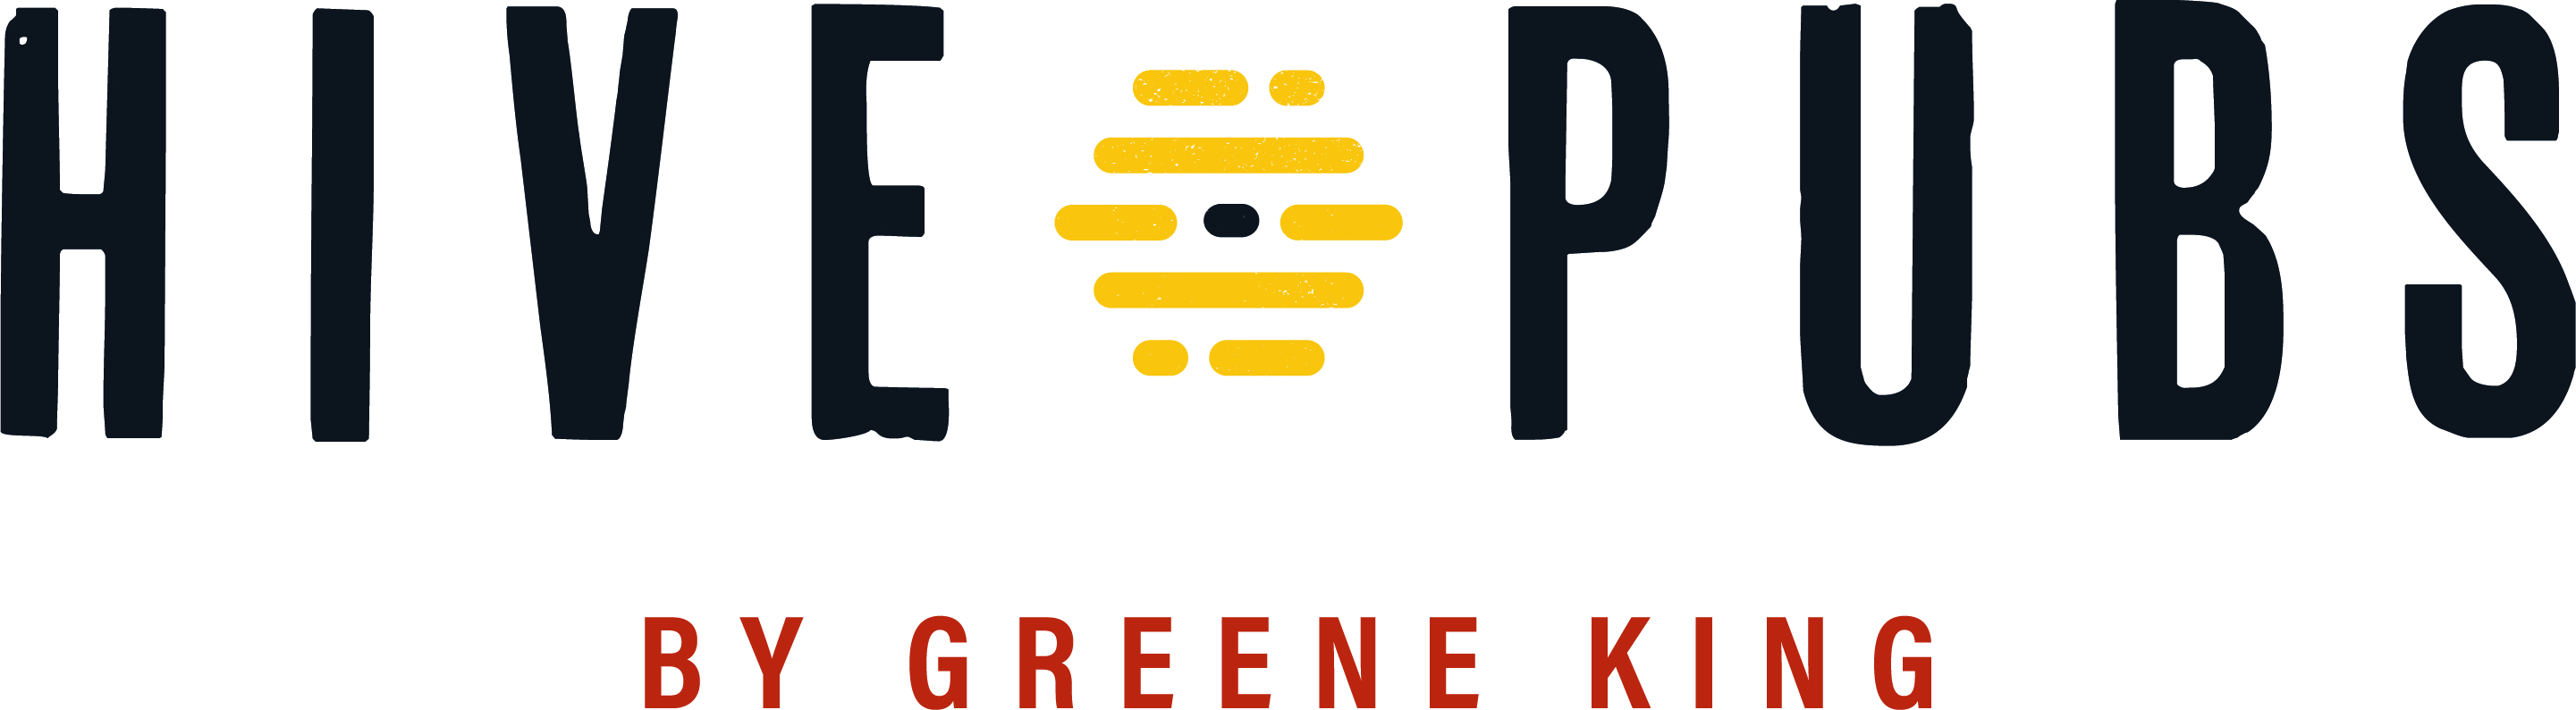 Greene King - Pub Partners